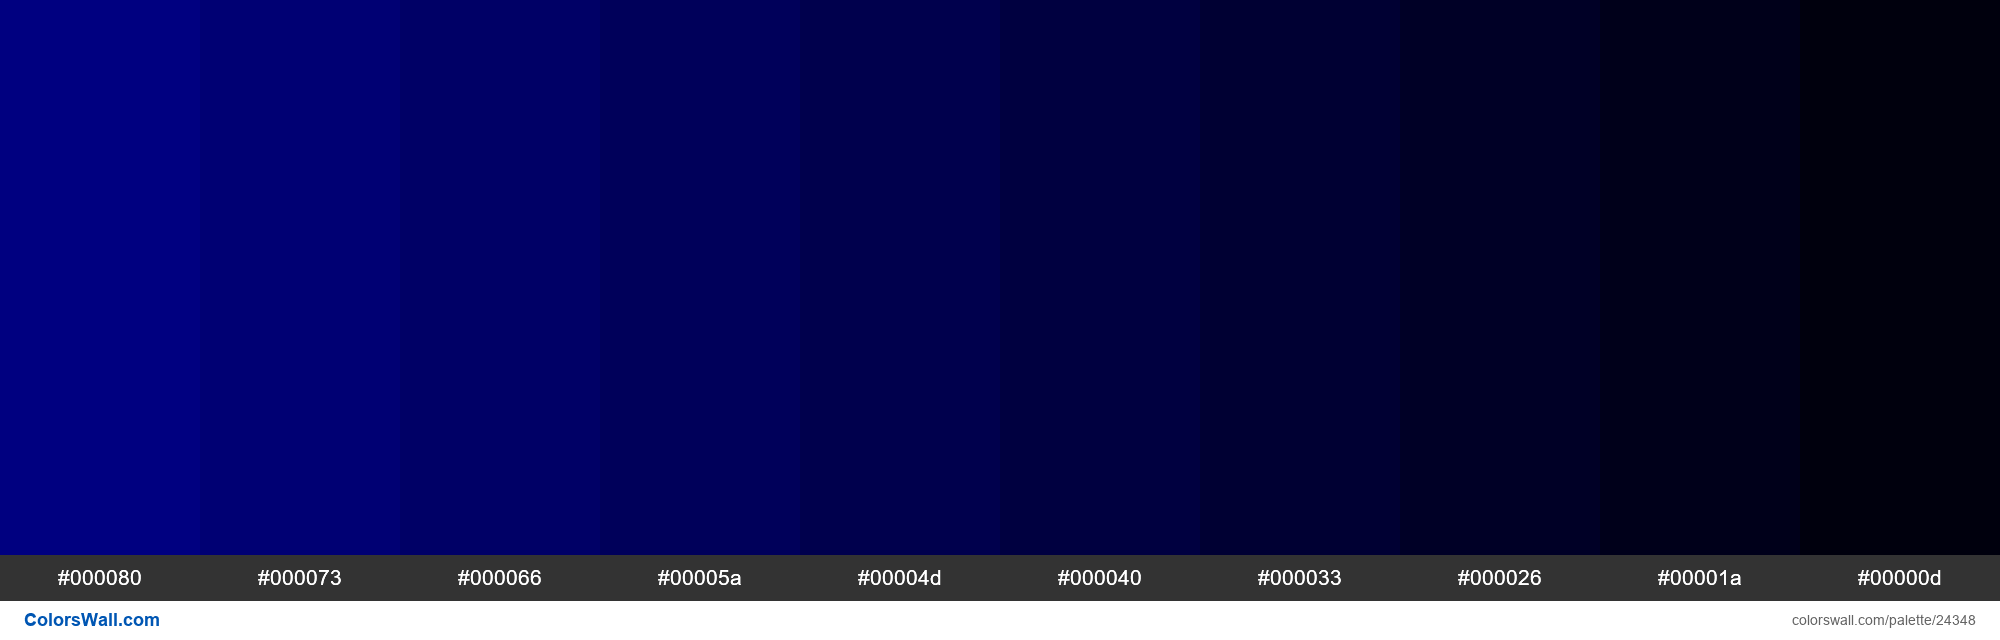 colorswall on X: Shades of Espresso color #4E312D hex #4e312d, #462c29,  #3e2724, #37221f, #2f1d1b, #271917, #1f1412, #170f0e, #100a09, #080504 # colors #palette   / X